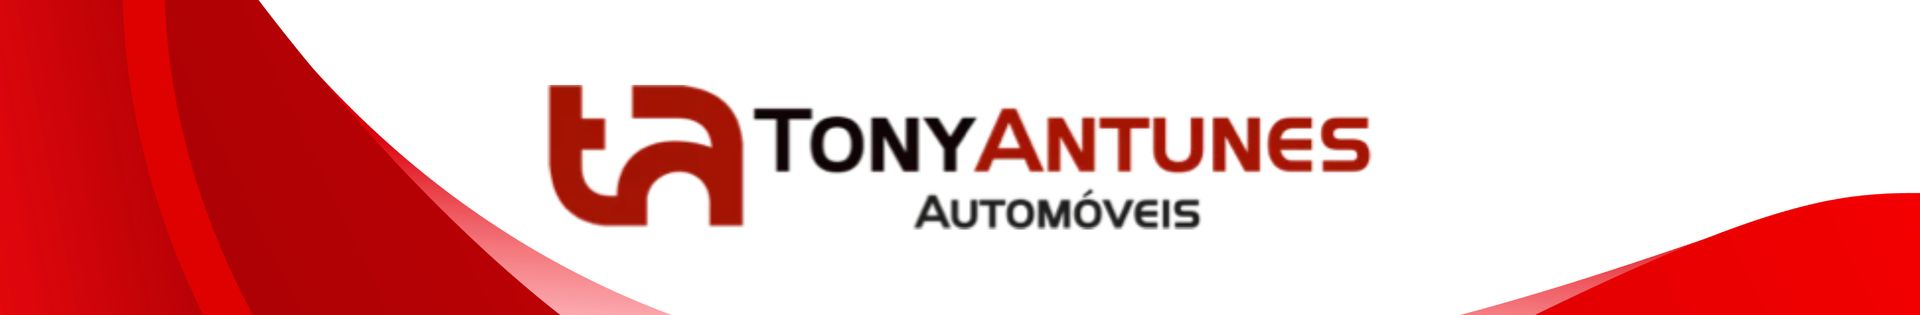 Tony Antunes Automóveis top banner